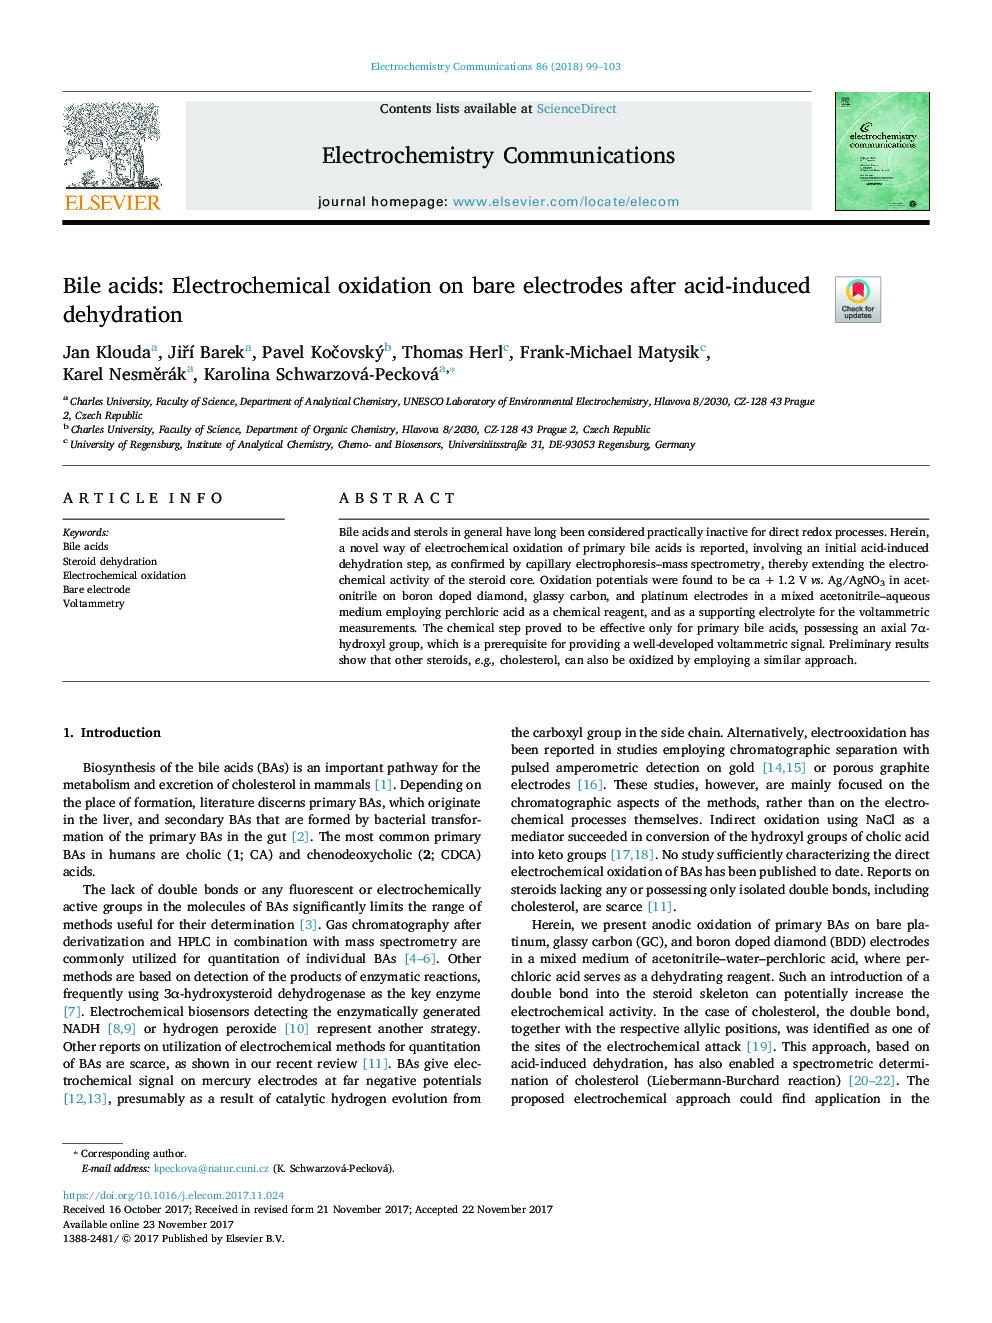 Bile acids: Electrochemical oxidation on bare electrodes after acid-induced dehydration